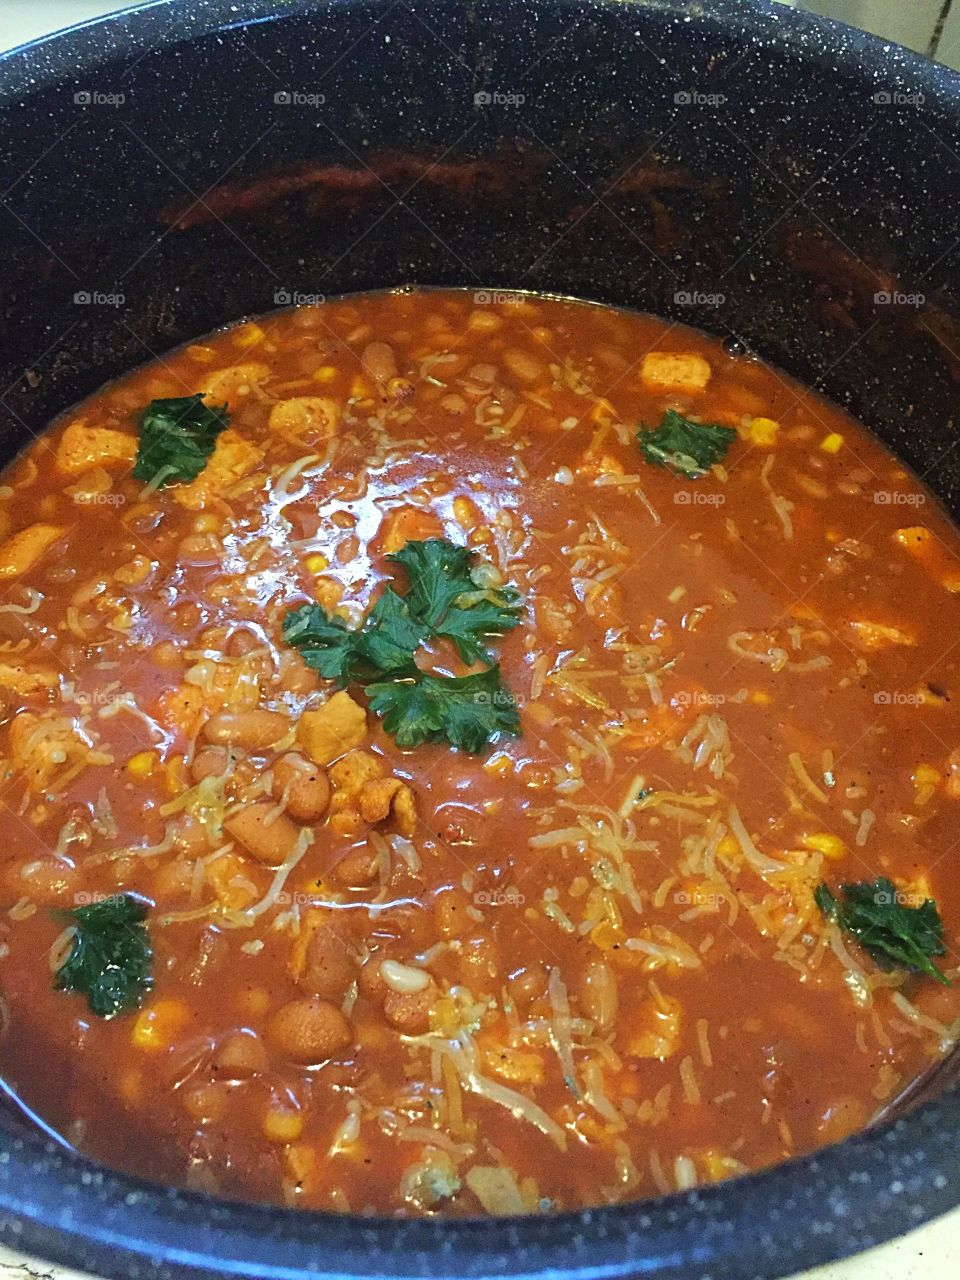 Pot of Chili 